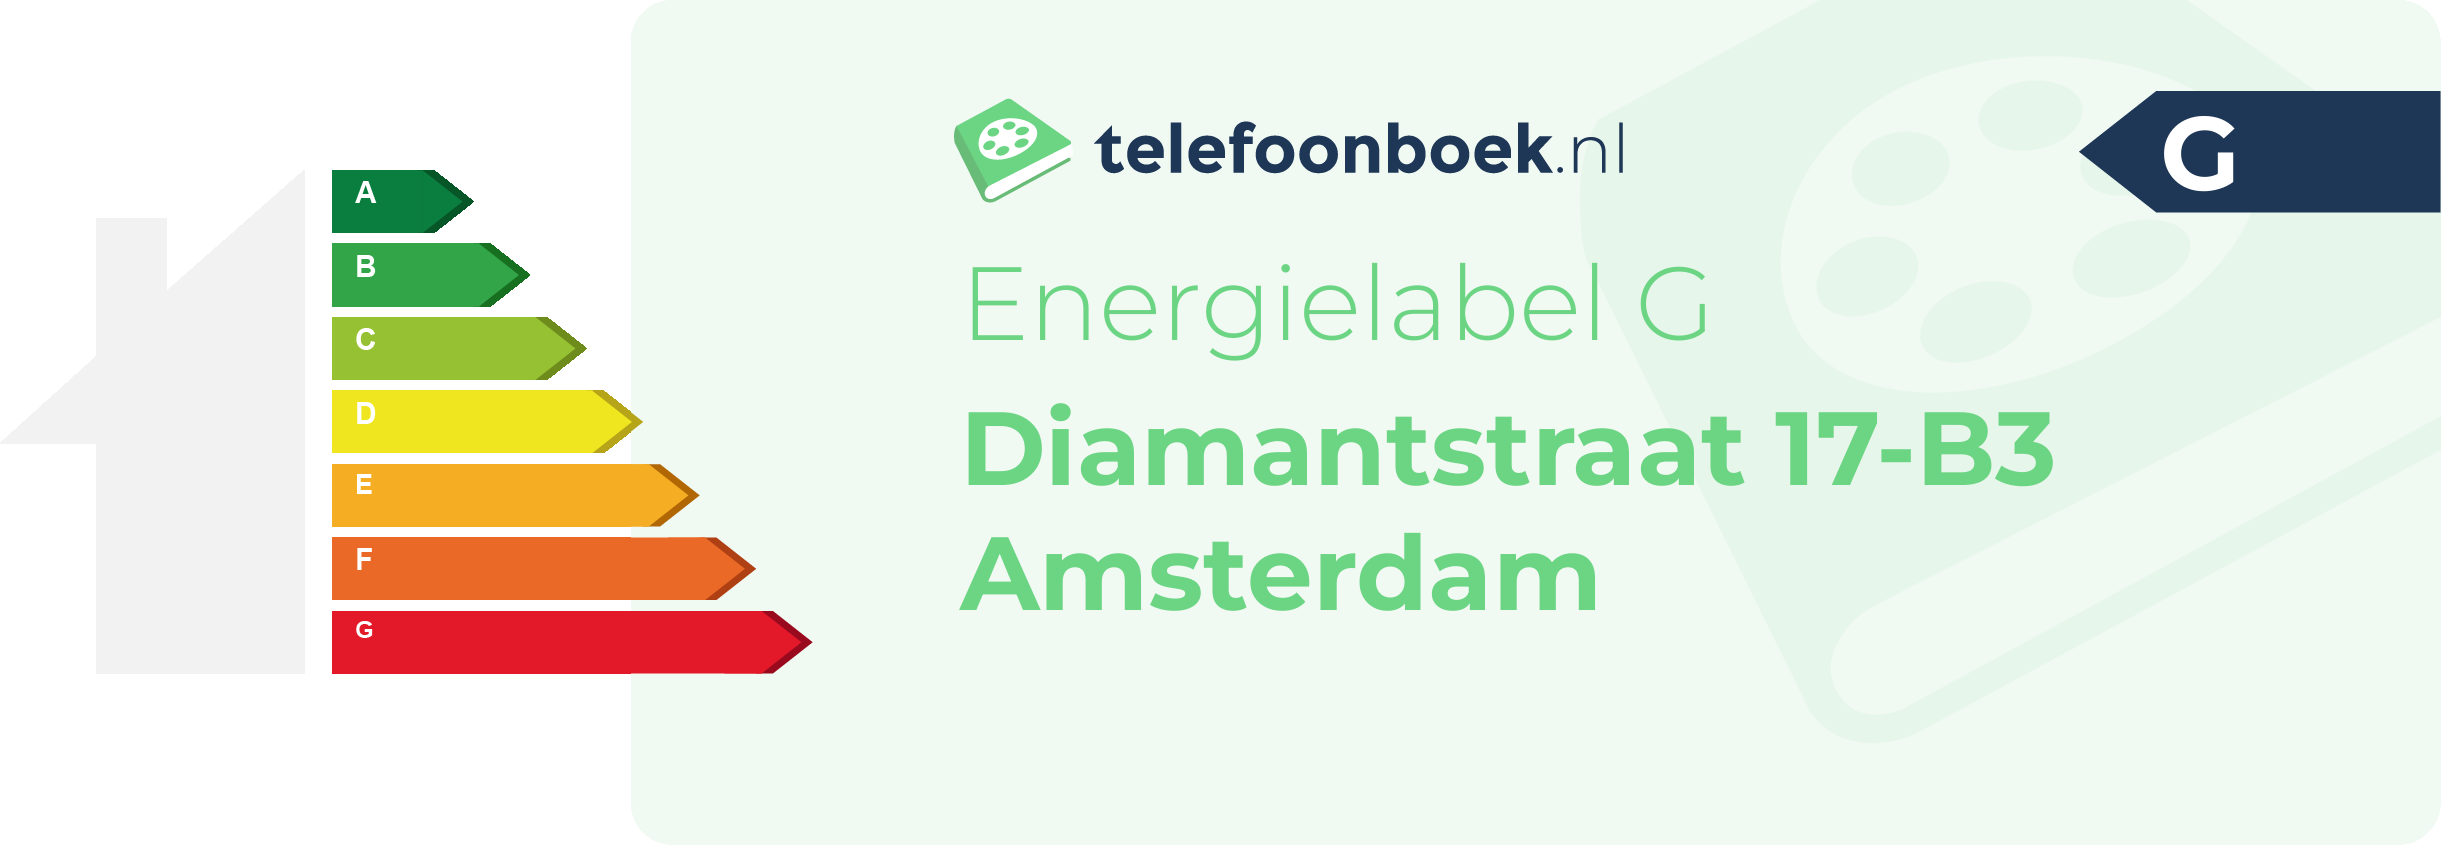 Energielabel Diamantstraat 17-B3 Amsterdam